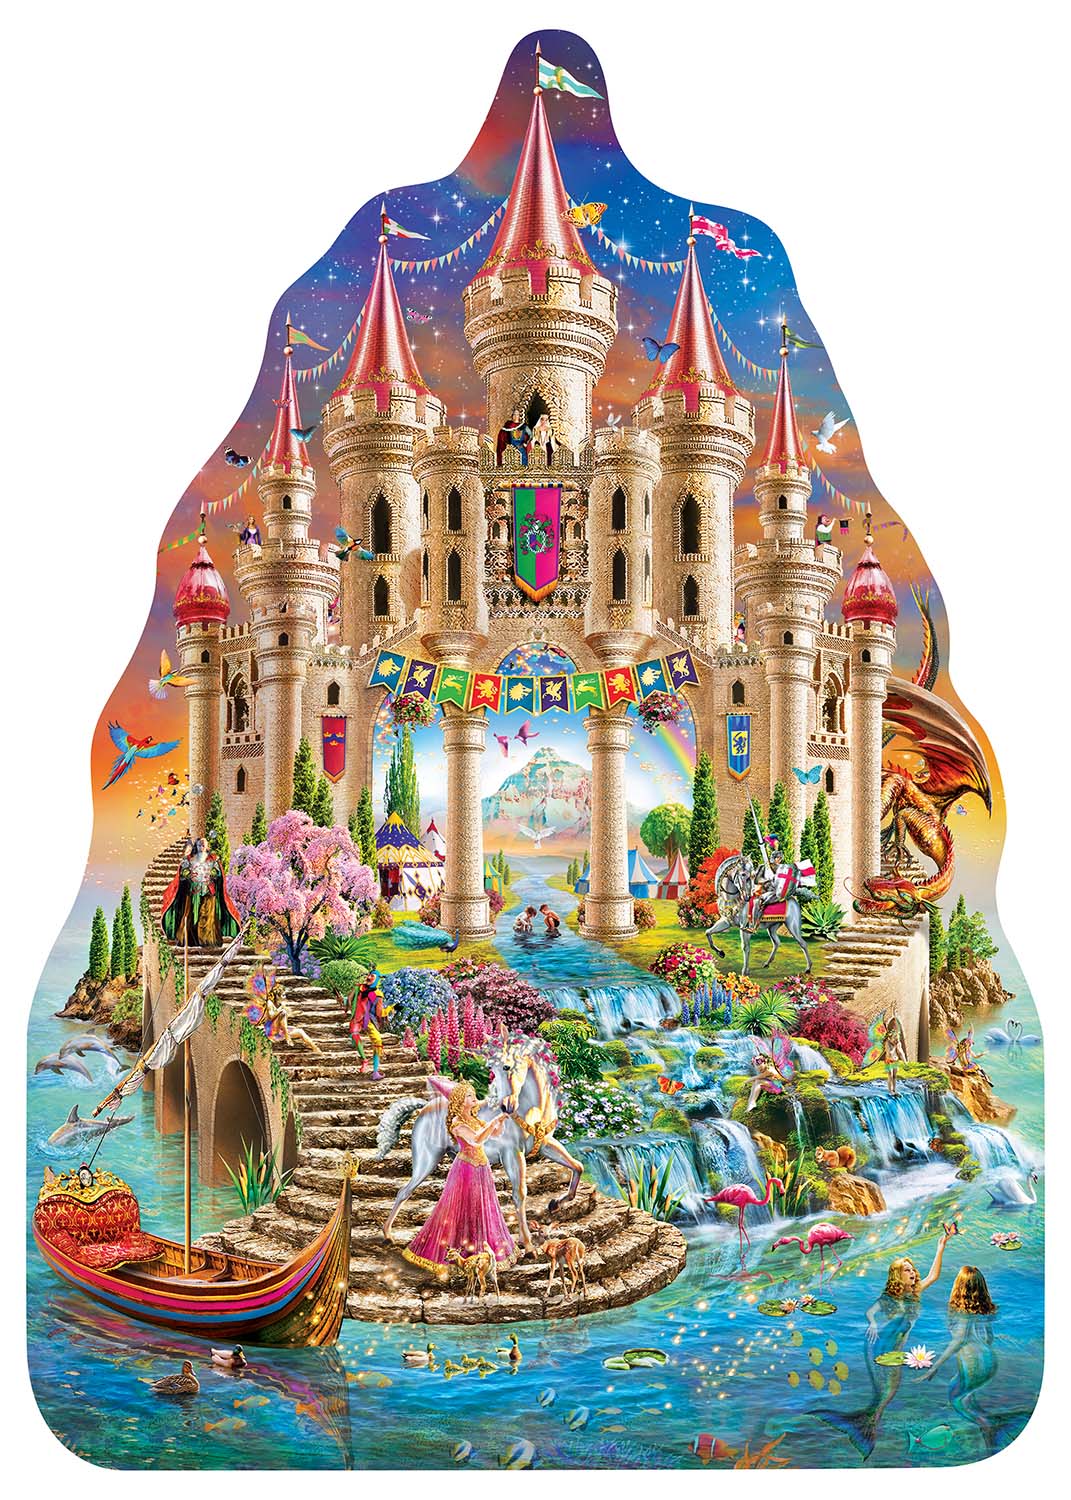 Shaped - Fairytale Kingdom  Castle Shaped Puzzle